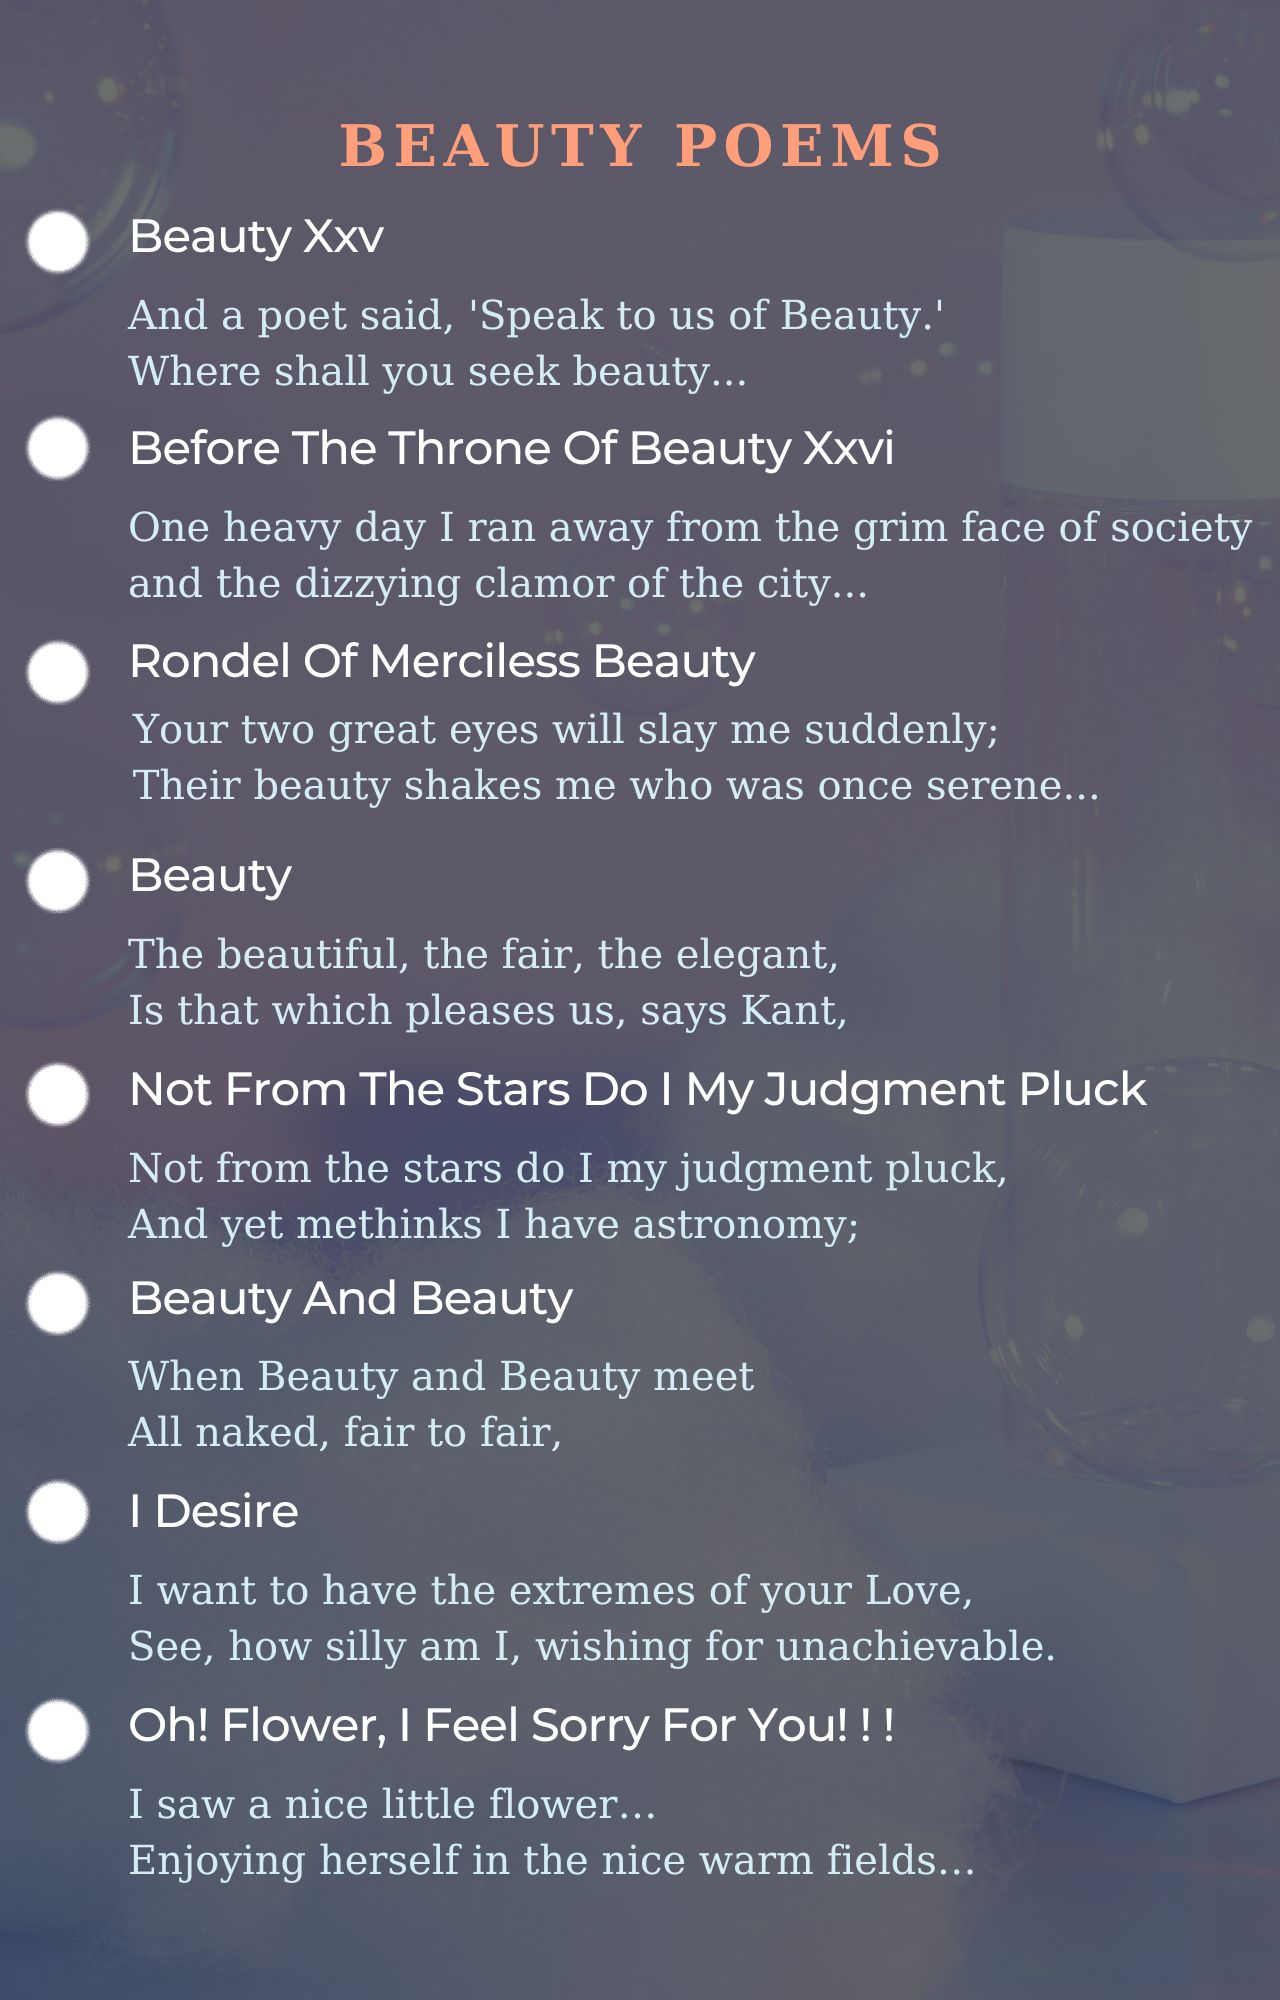 Beauty Poets